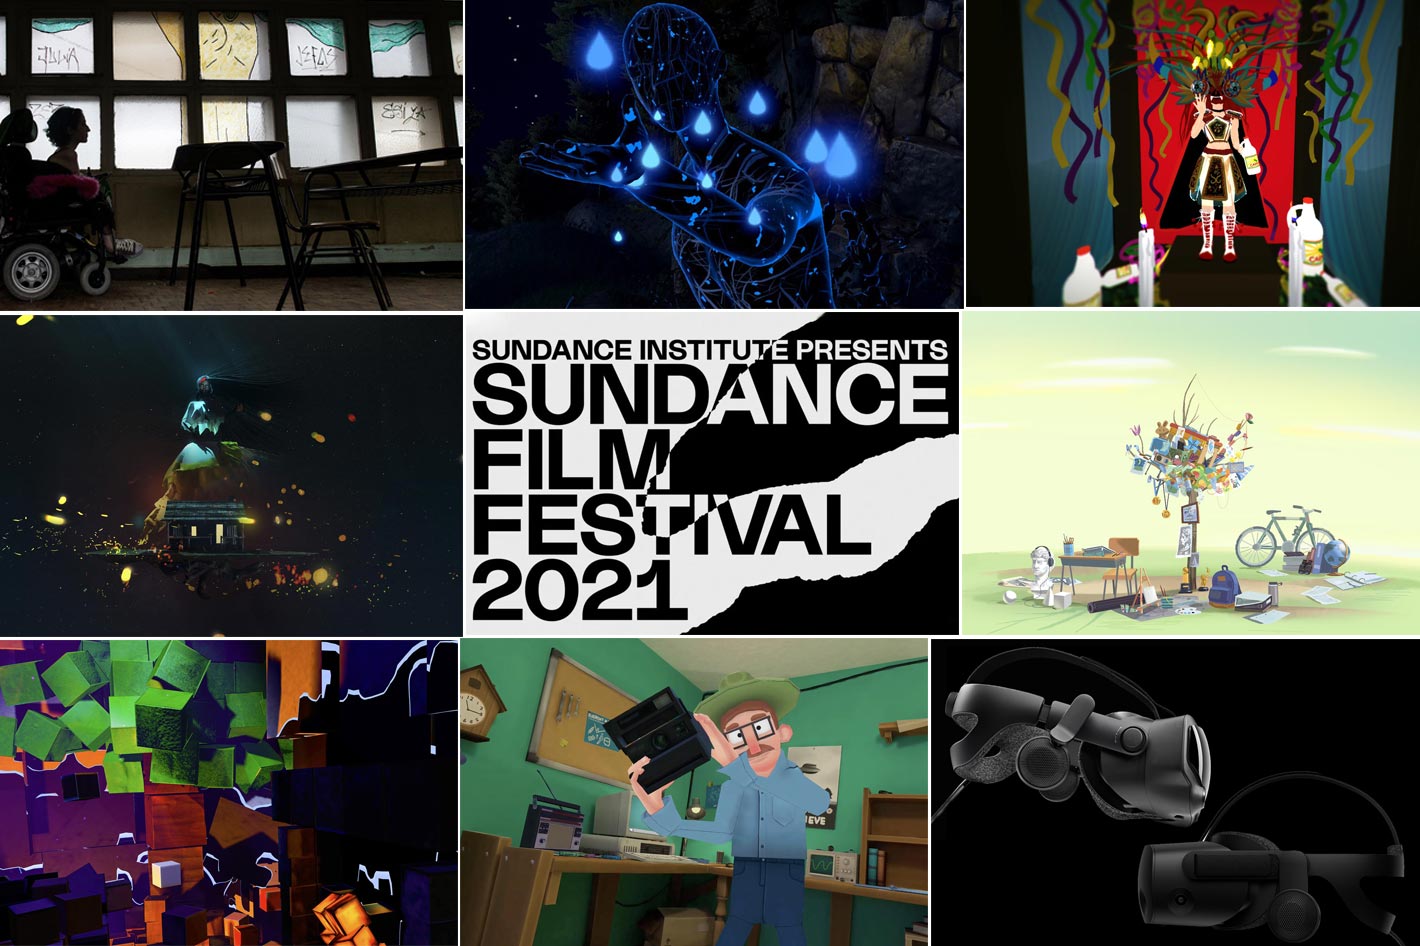 2021 Sundance Film Festival: VR at the New Frontier